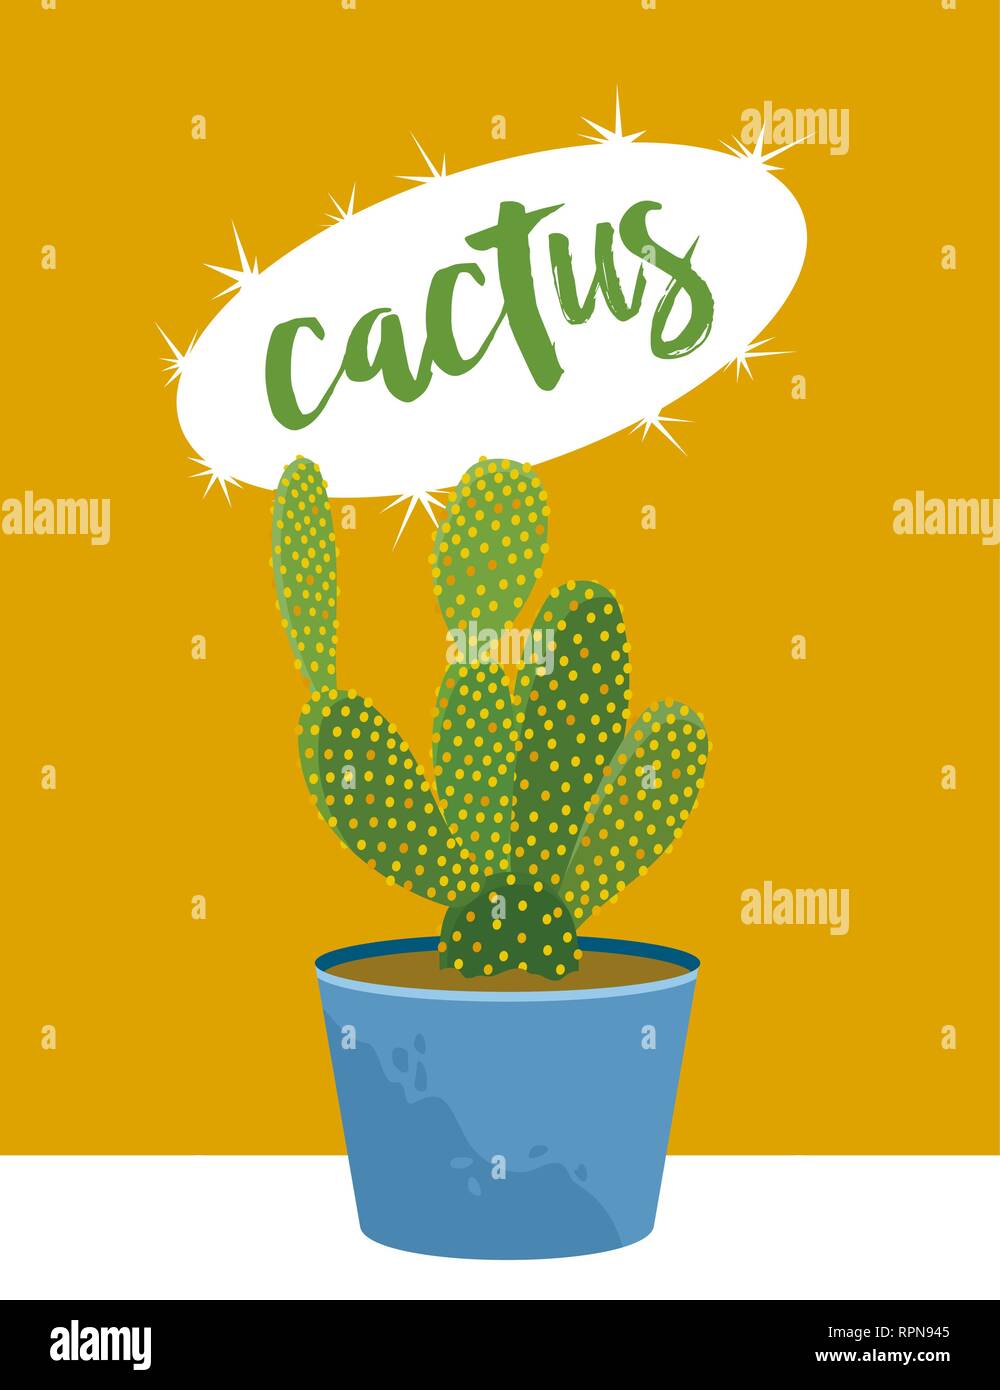 Cactus background Stock Vector